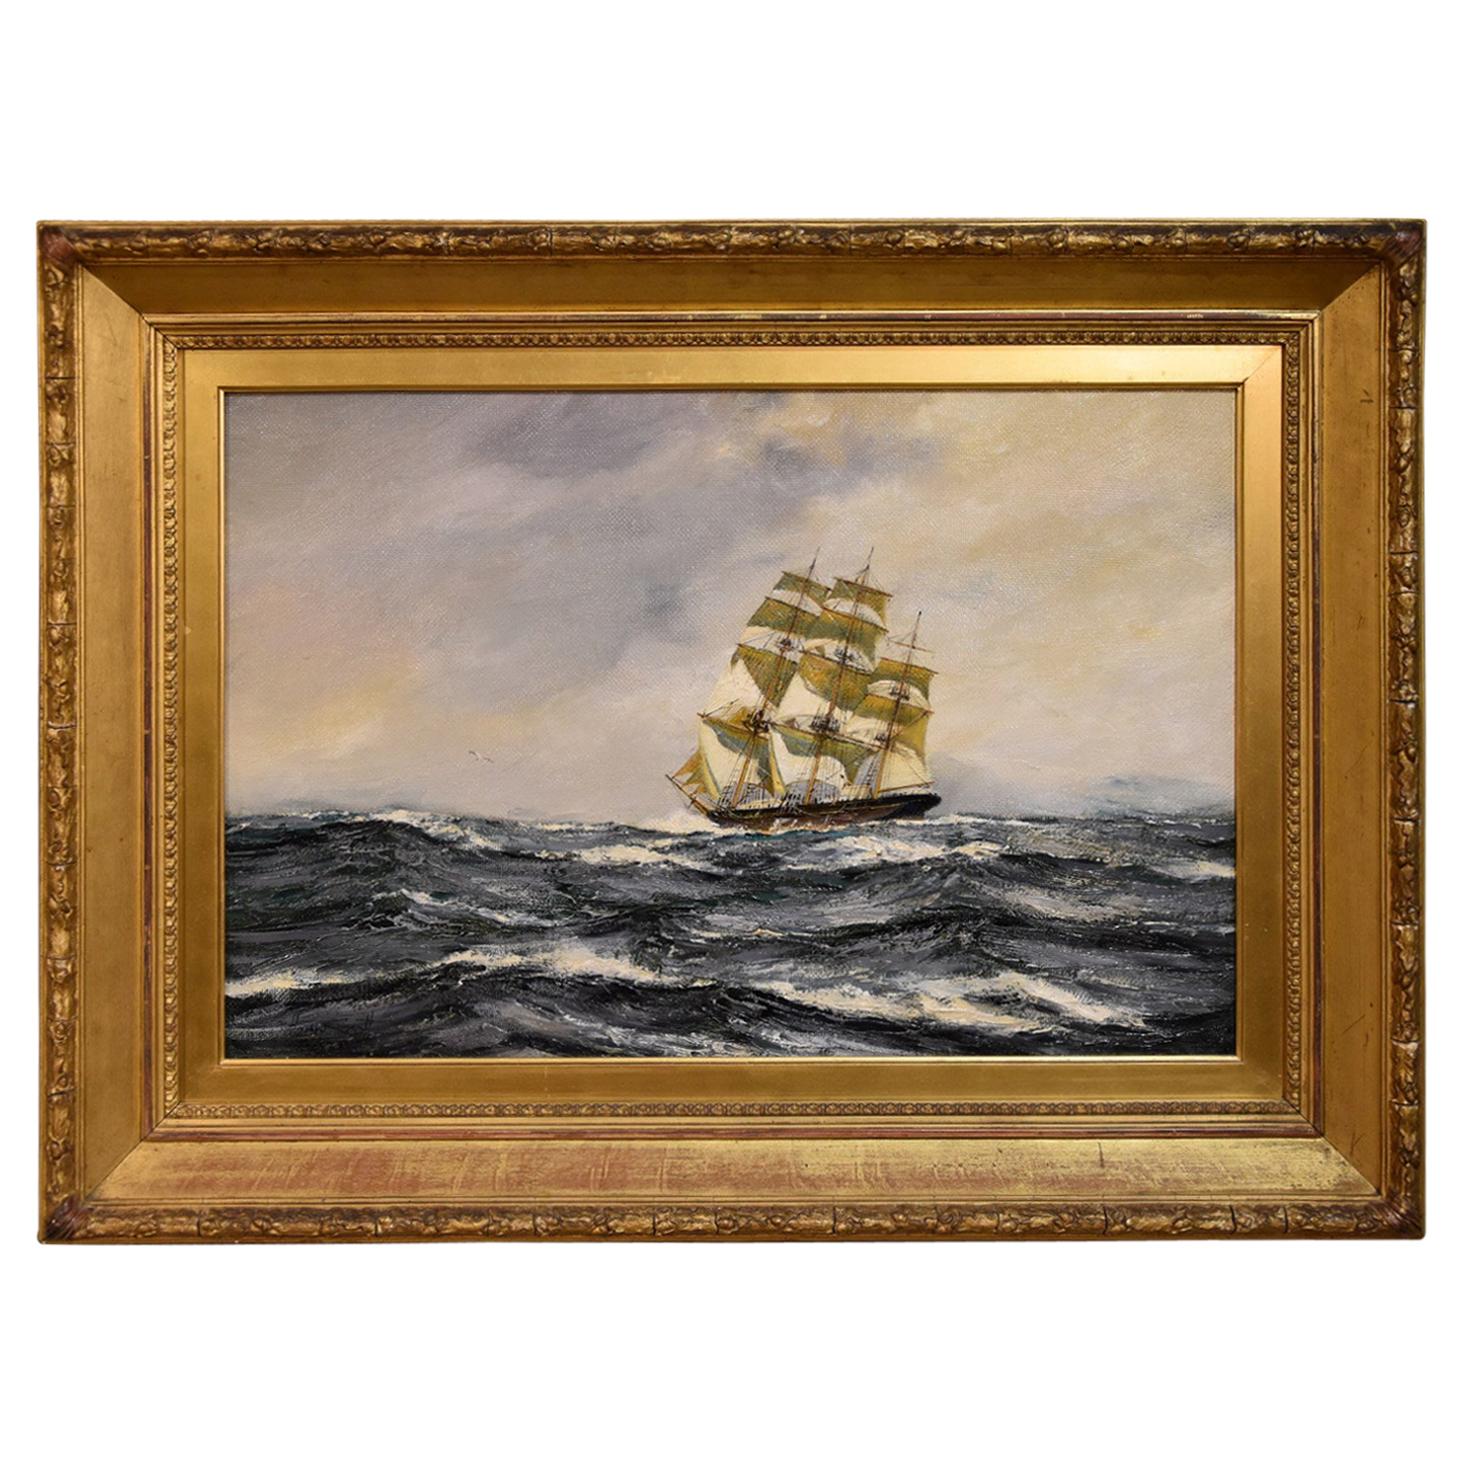 "Outward Bound, The Clipper Ship Lightning" by Henry Scott